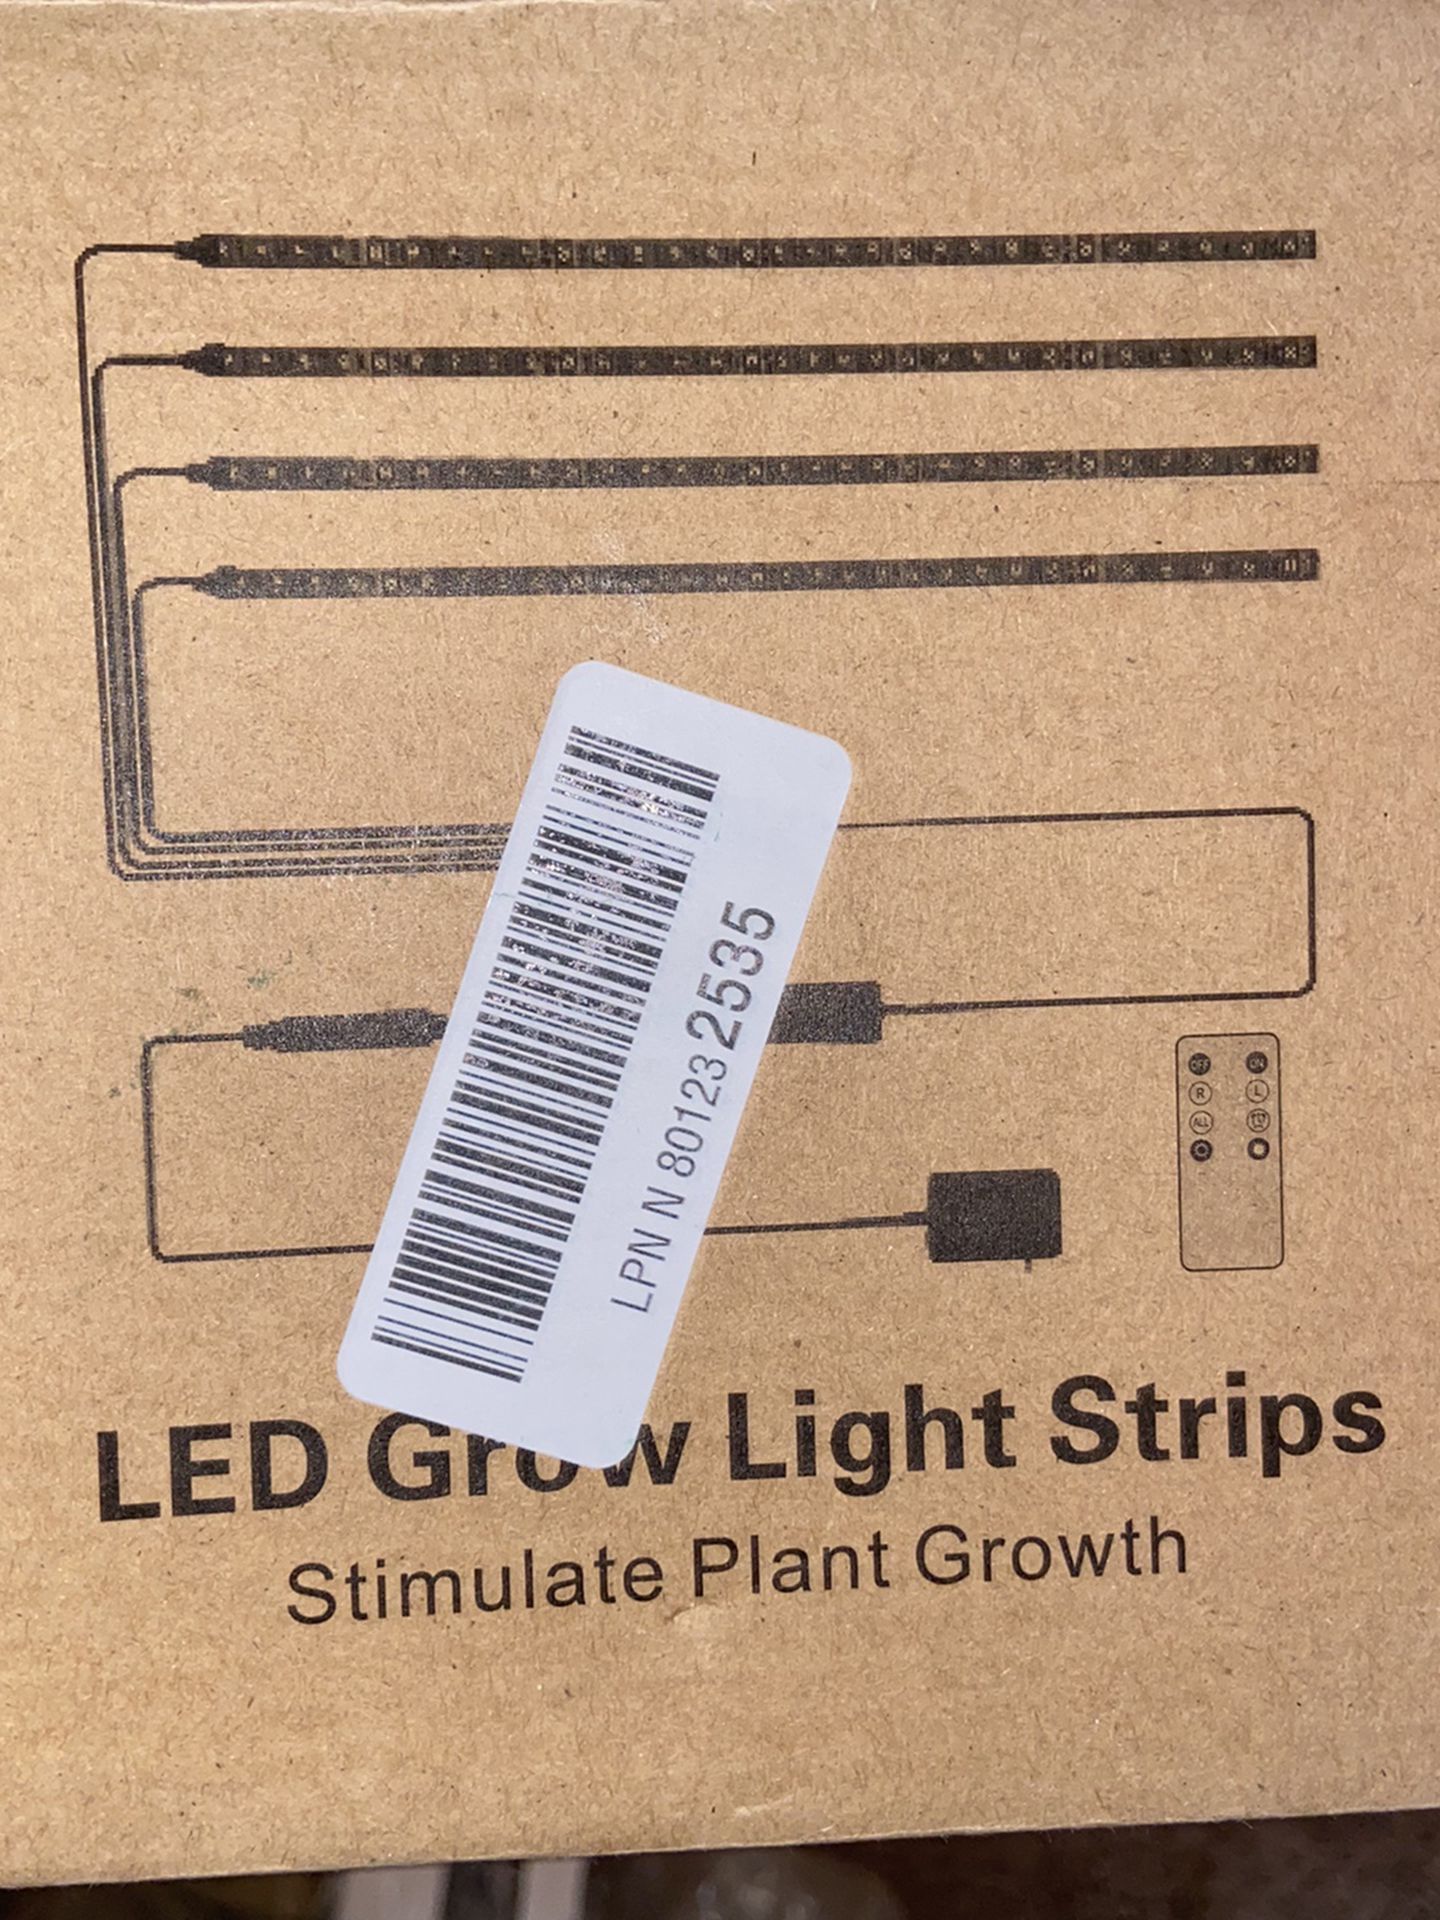 LED Grow Light Strips